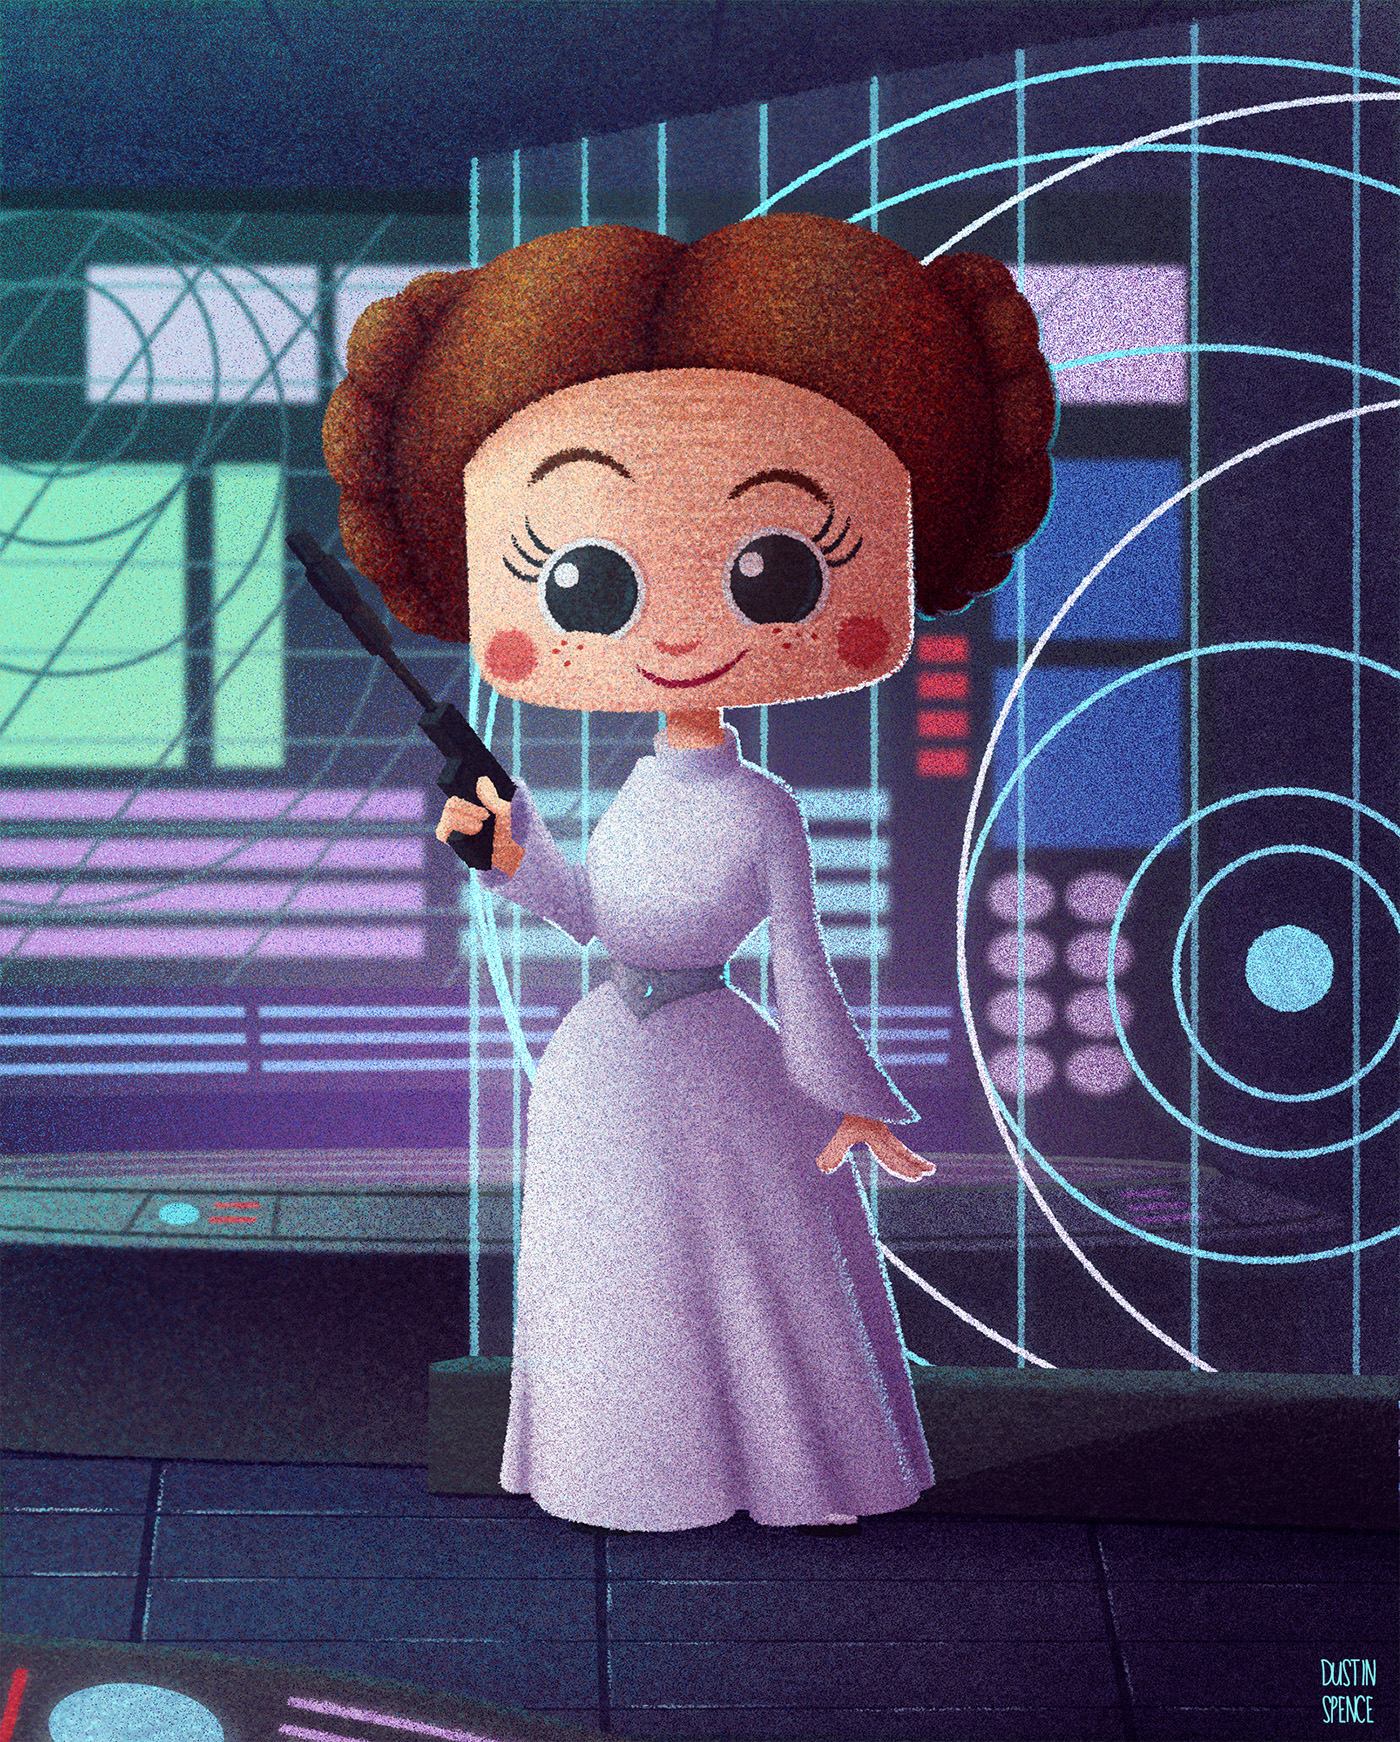 star wars Princess Leia kidlit childrens books cute Sci Fi art fantasy